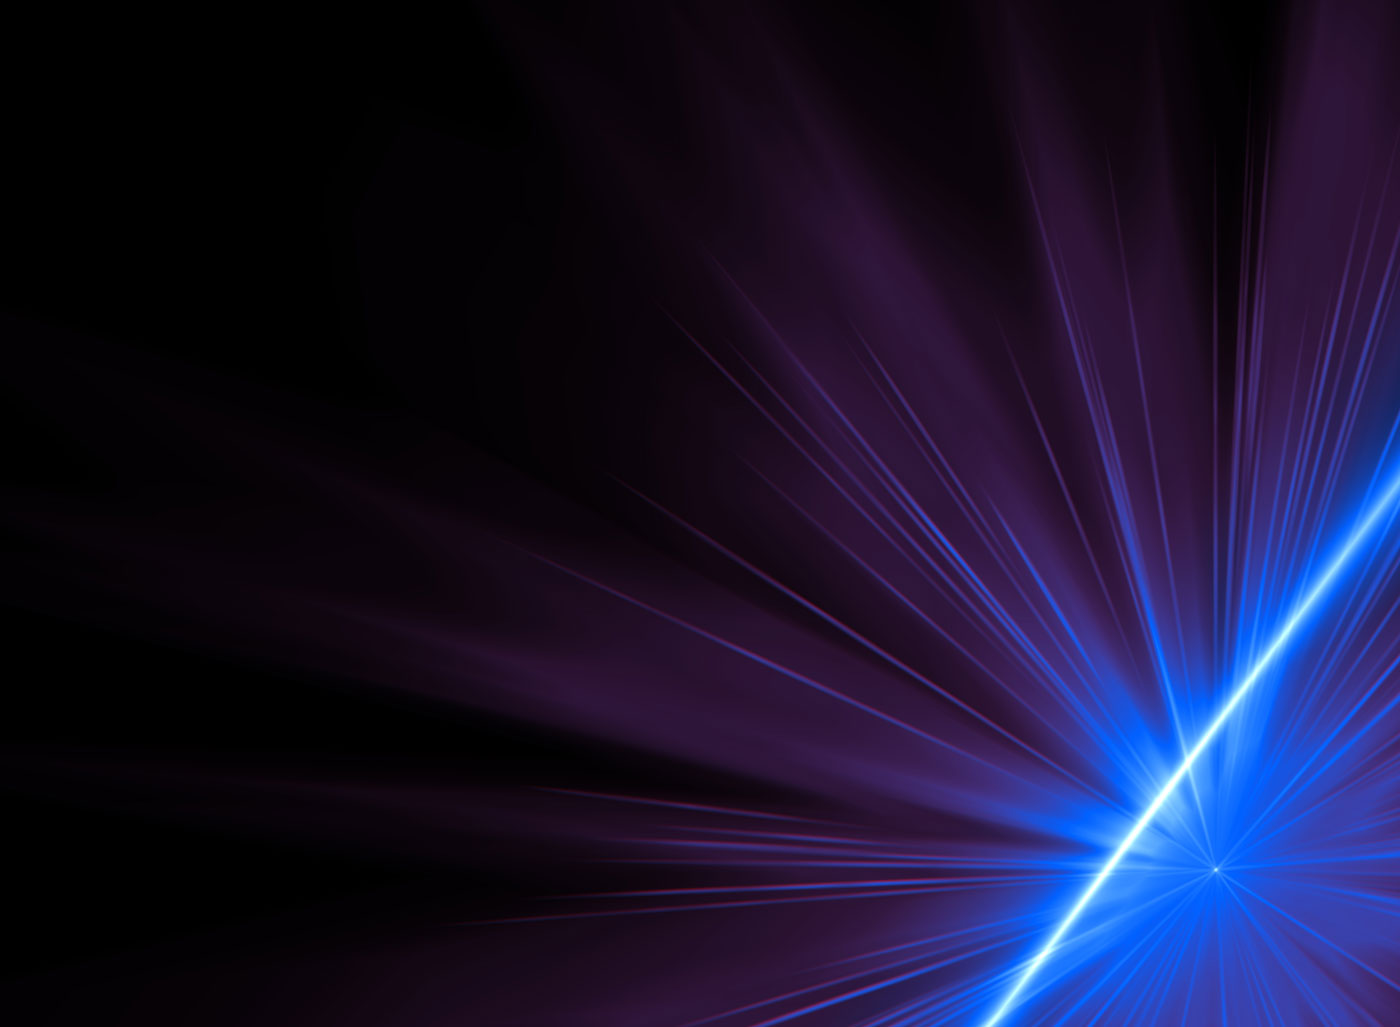 View of blue laser light